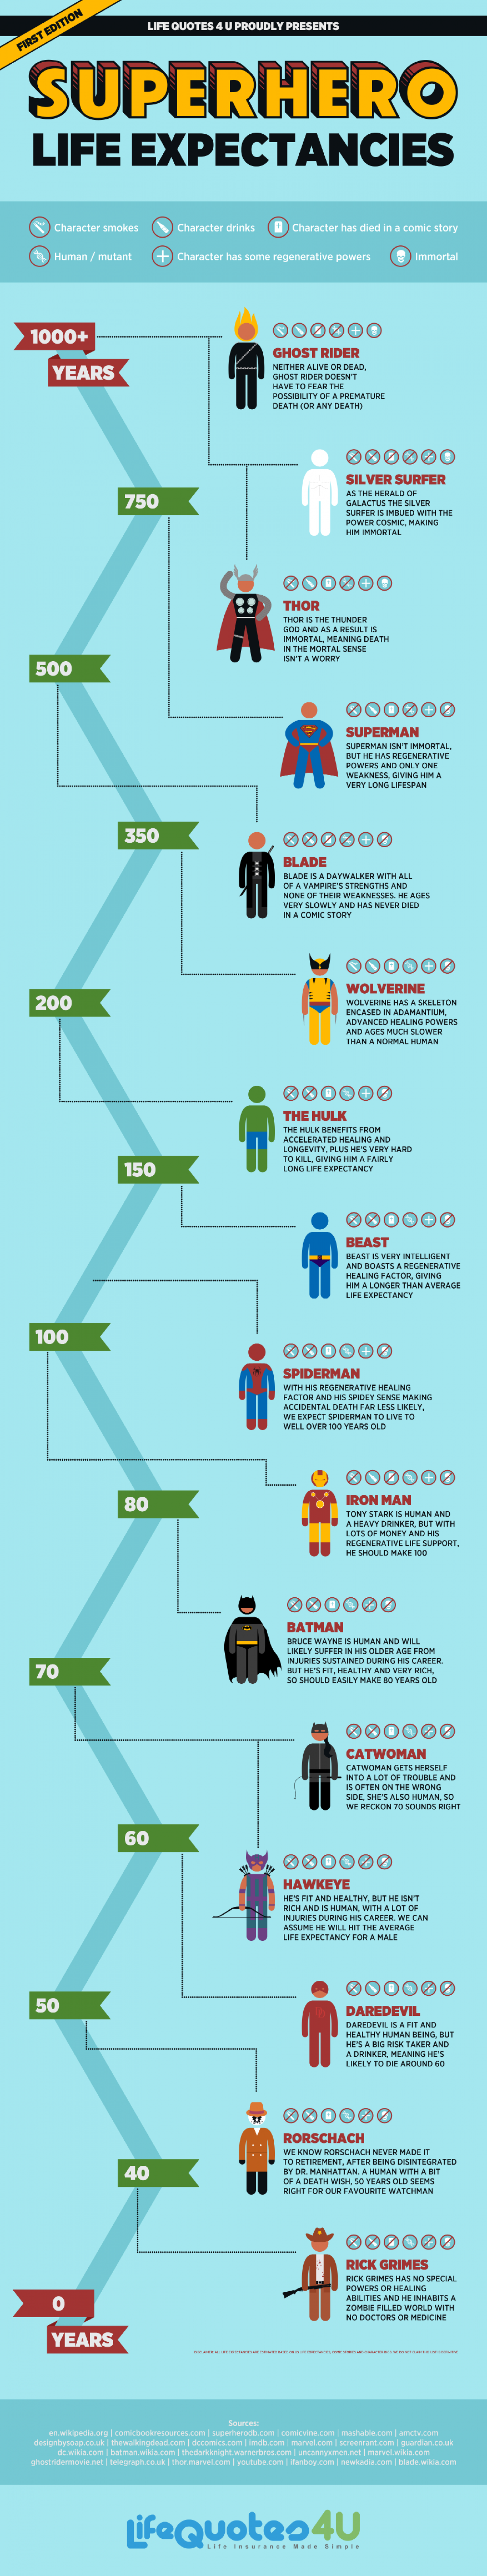 Superhero Life Expectancies Infographic